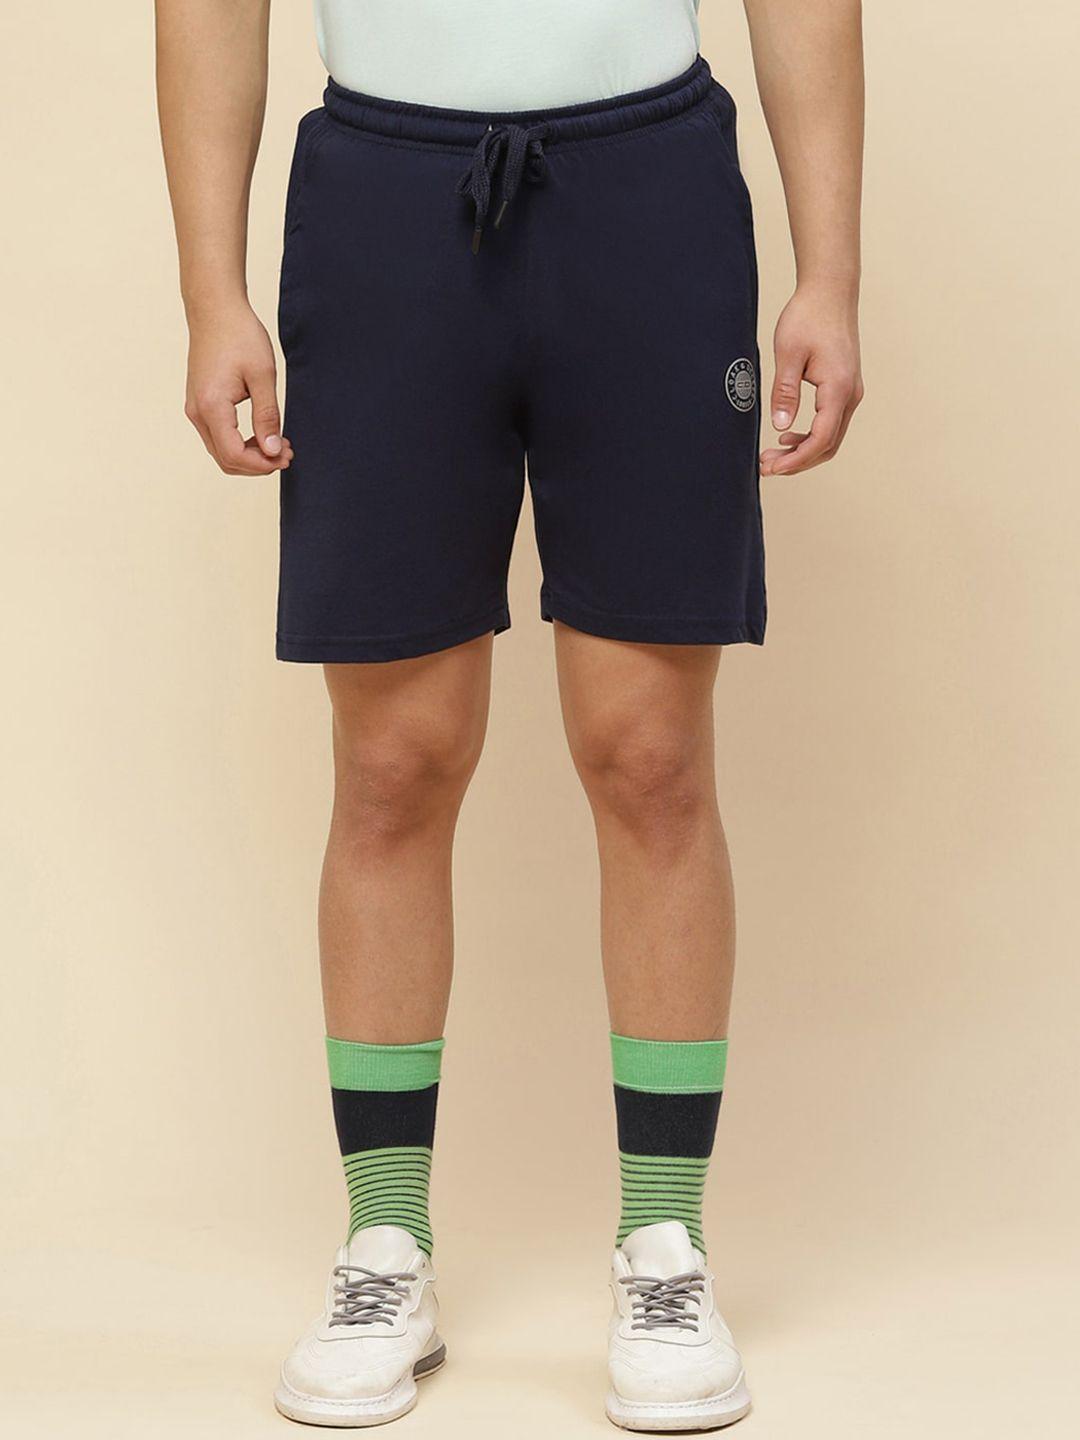 cloak & decker by monte carlo men mid-rise cotton shorts